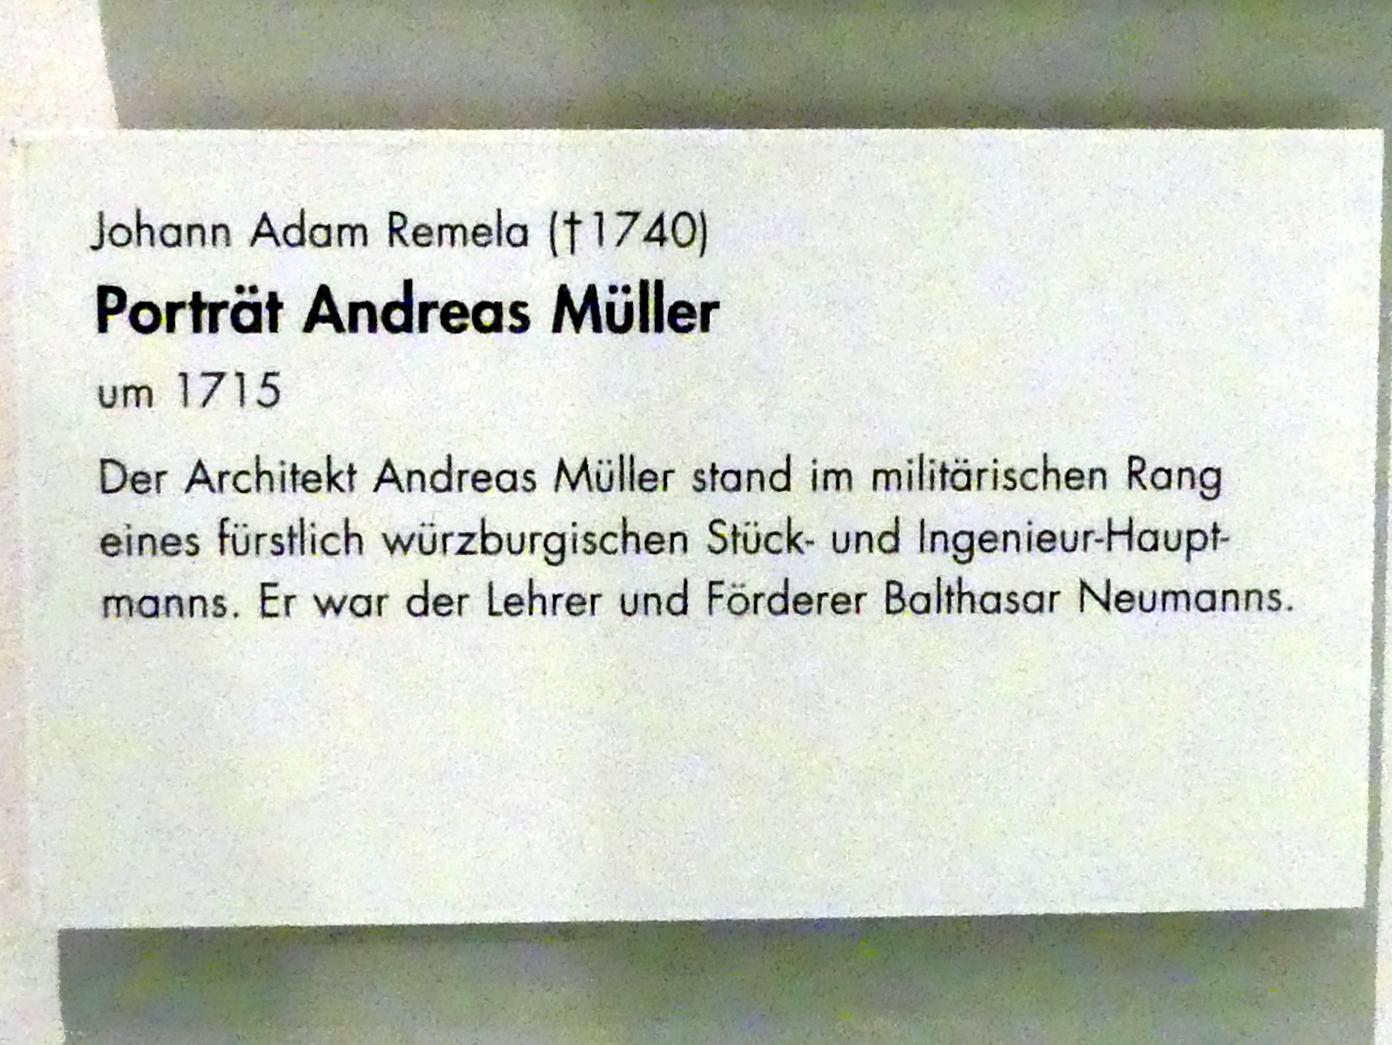 Johann Adam Remele (1715), Porträt Andreas Müller, Würzburg, Museum für Franken (ehem. Mainfränkisches Museum), Barock-Saal, um 1715, Bild 3/3